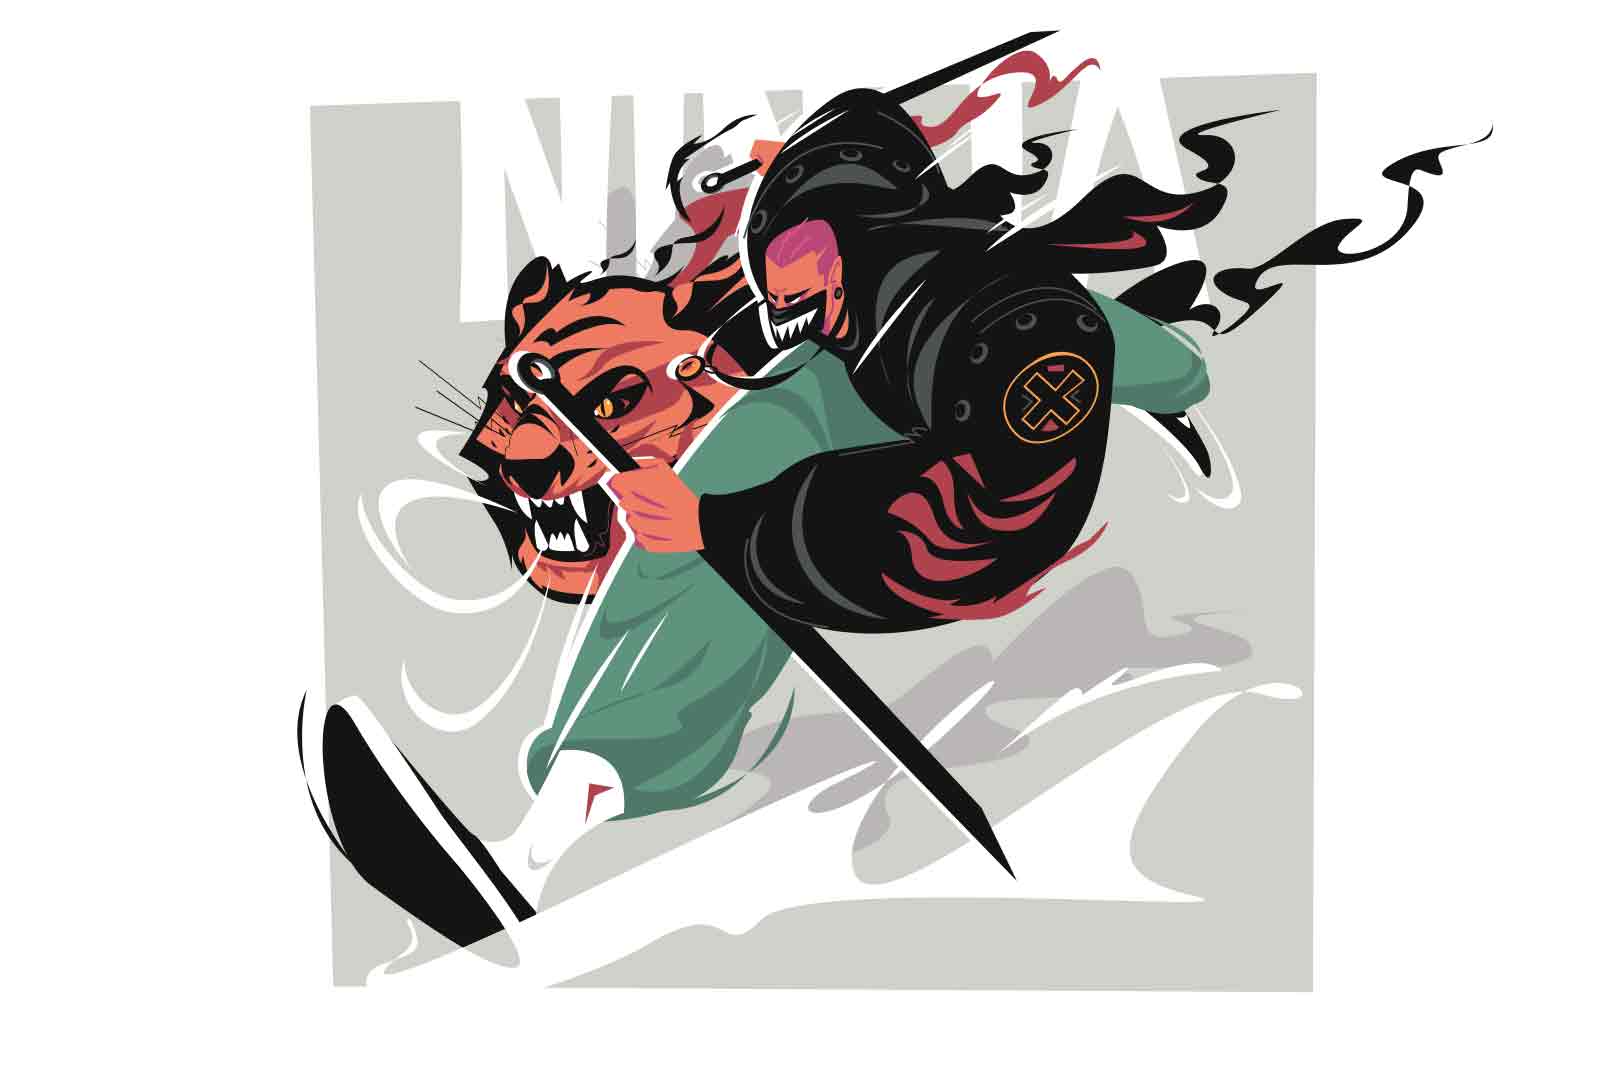 Samurai flying into battle in leap vector illustration. Crushing attack with katana. Ninja warrior and tiger samurai concept